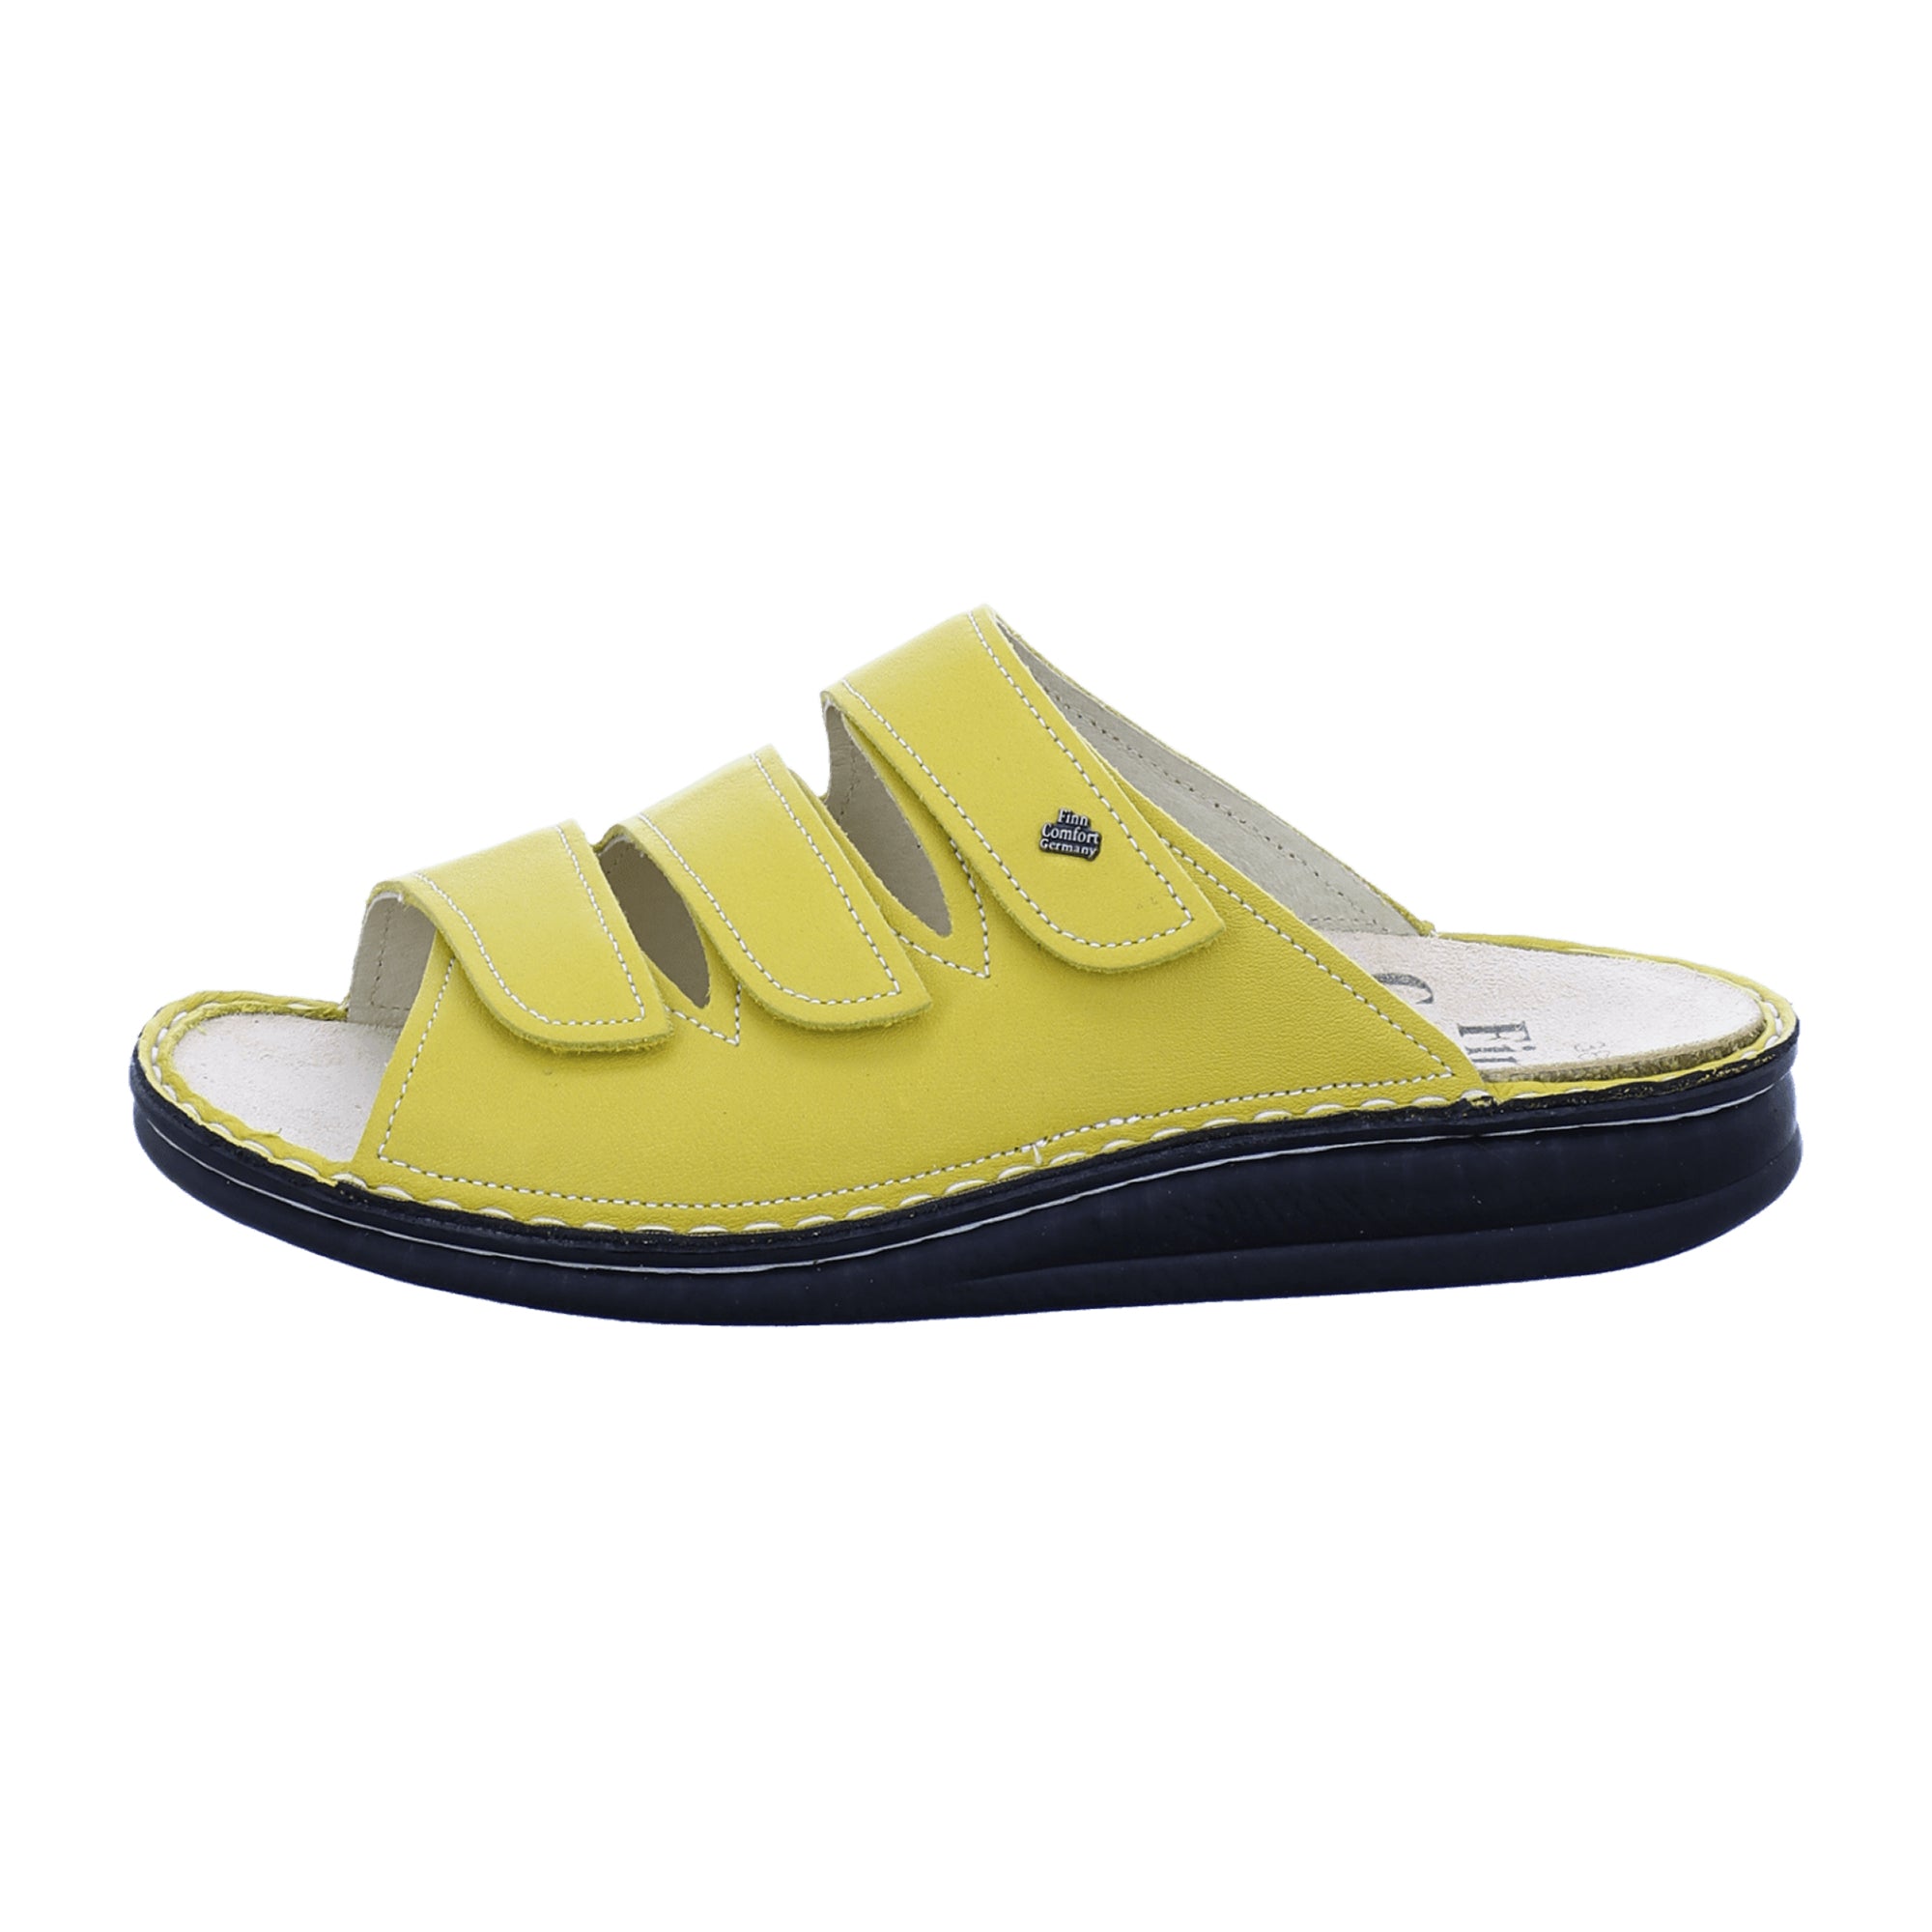 Finn Comfort Korfu Women's Yellow Sandals - Stylish & Comfortable